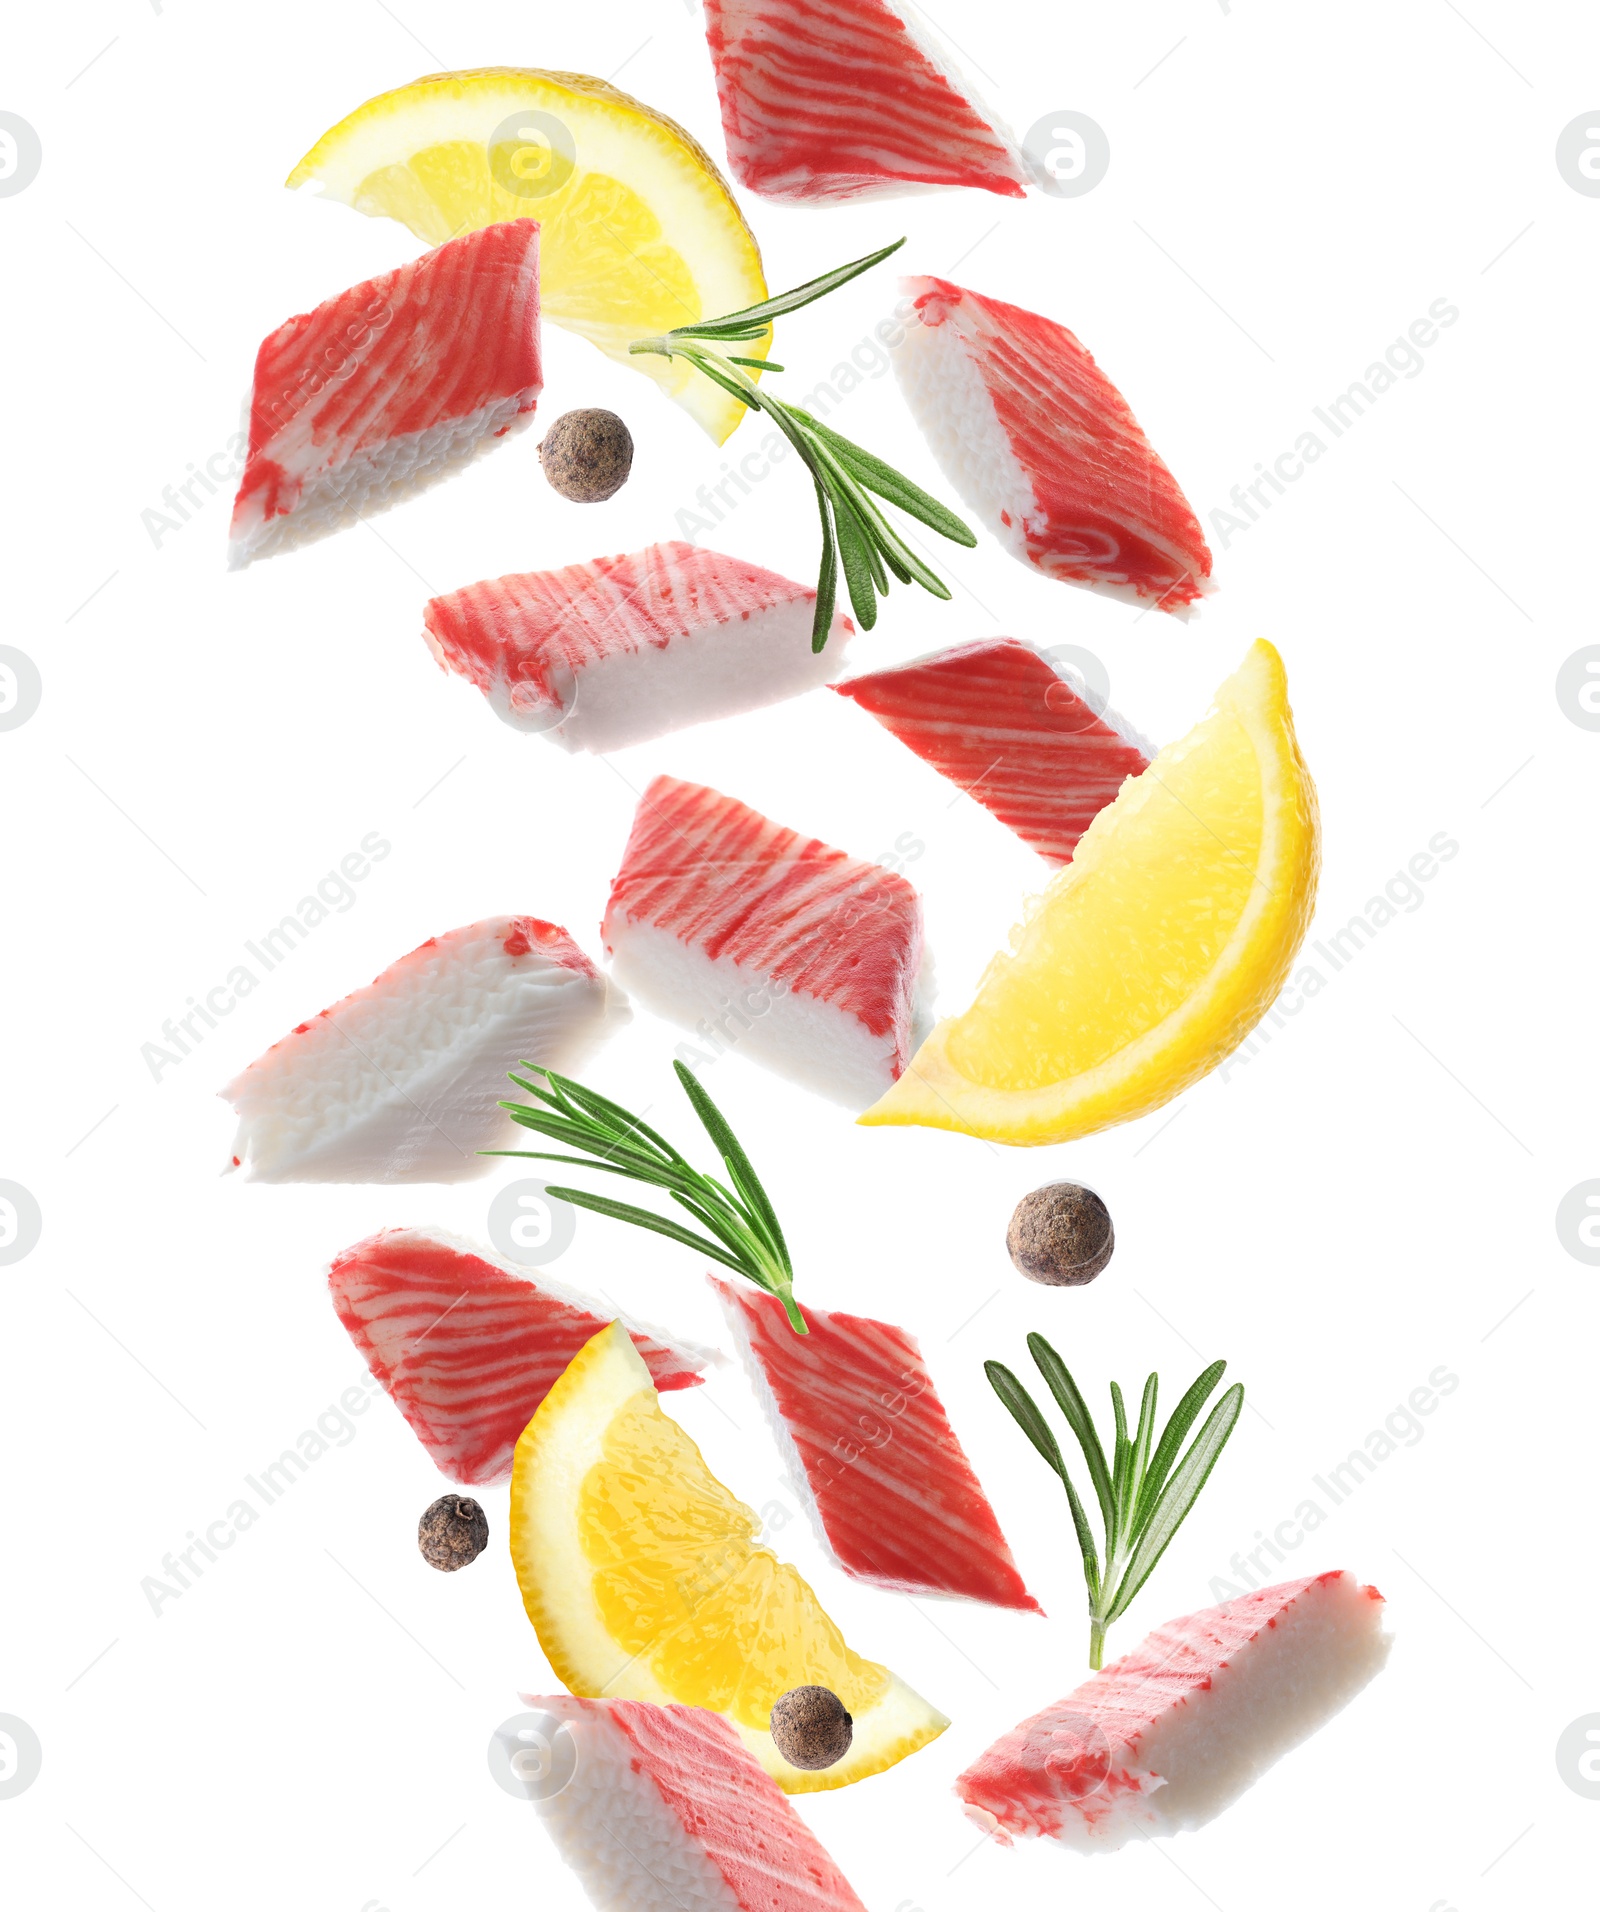 Image of Cut fresh crab sticks, lemon, rosemary and allspice falling on white background